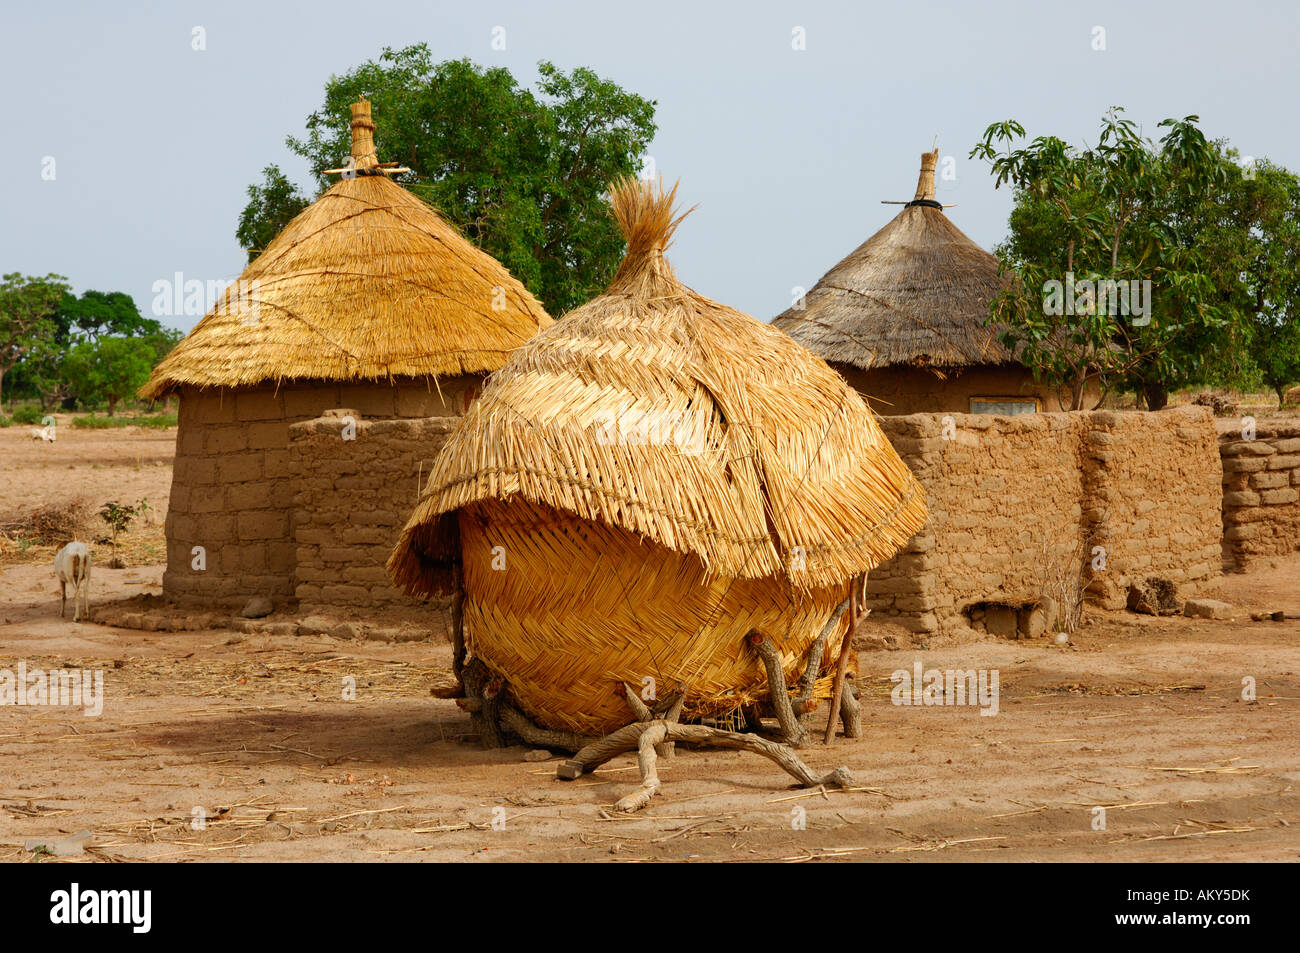 African homestead with granary, Burkina Faso Stock Photo